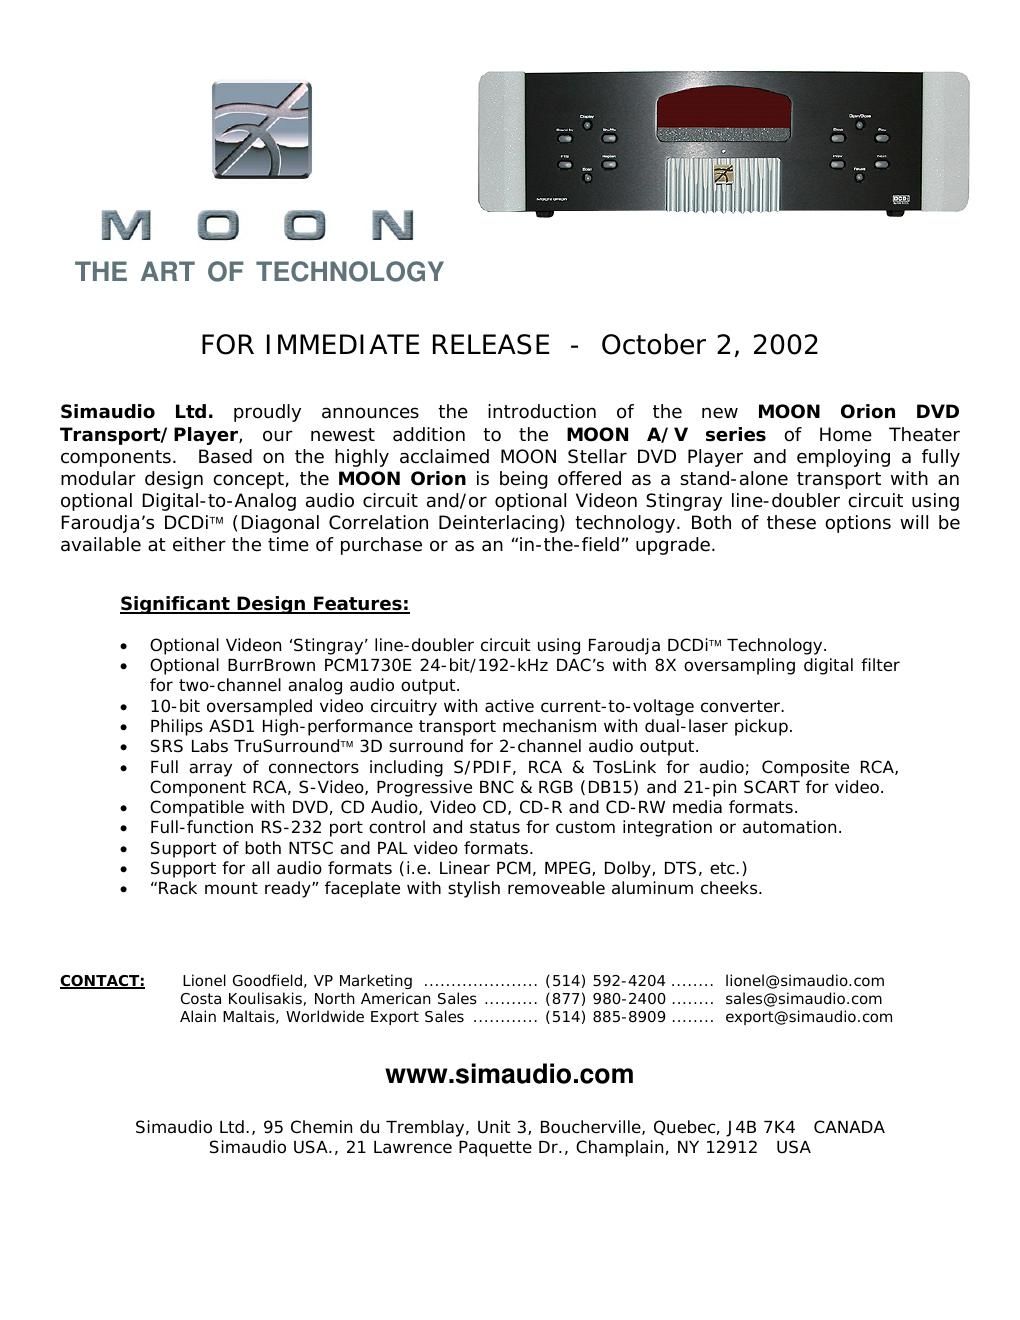 moon orion brochure